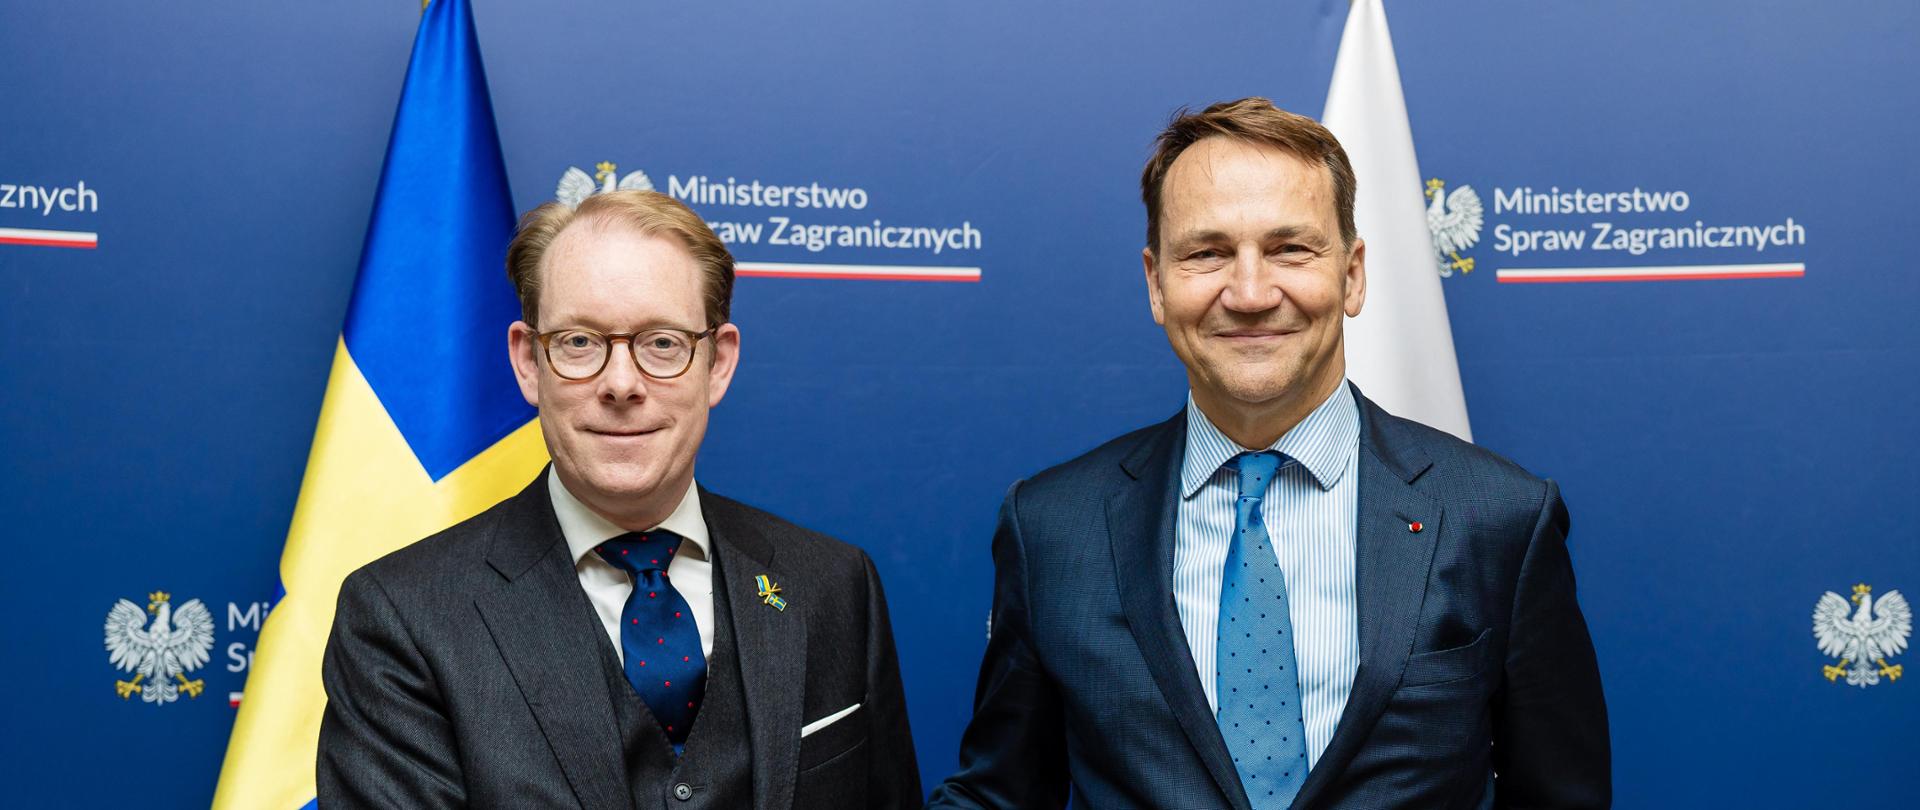 Minister Radosław Sikorski meets Sweden’s Foreign Minister Tobias Billström